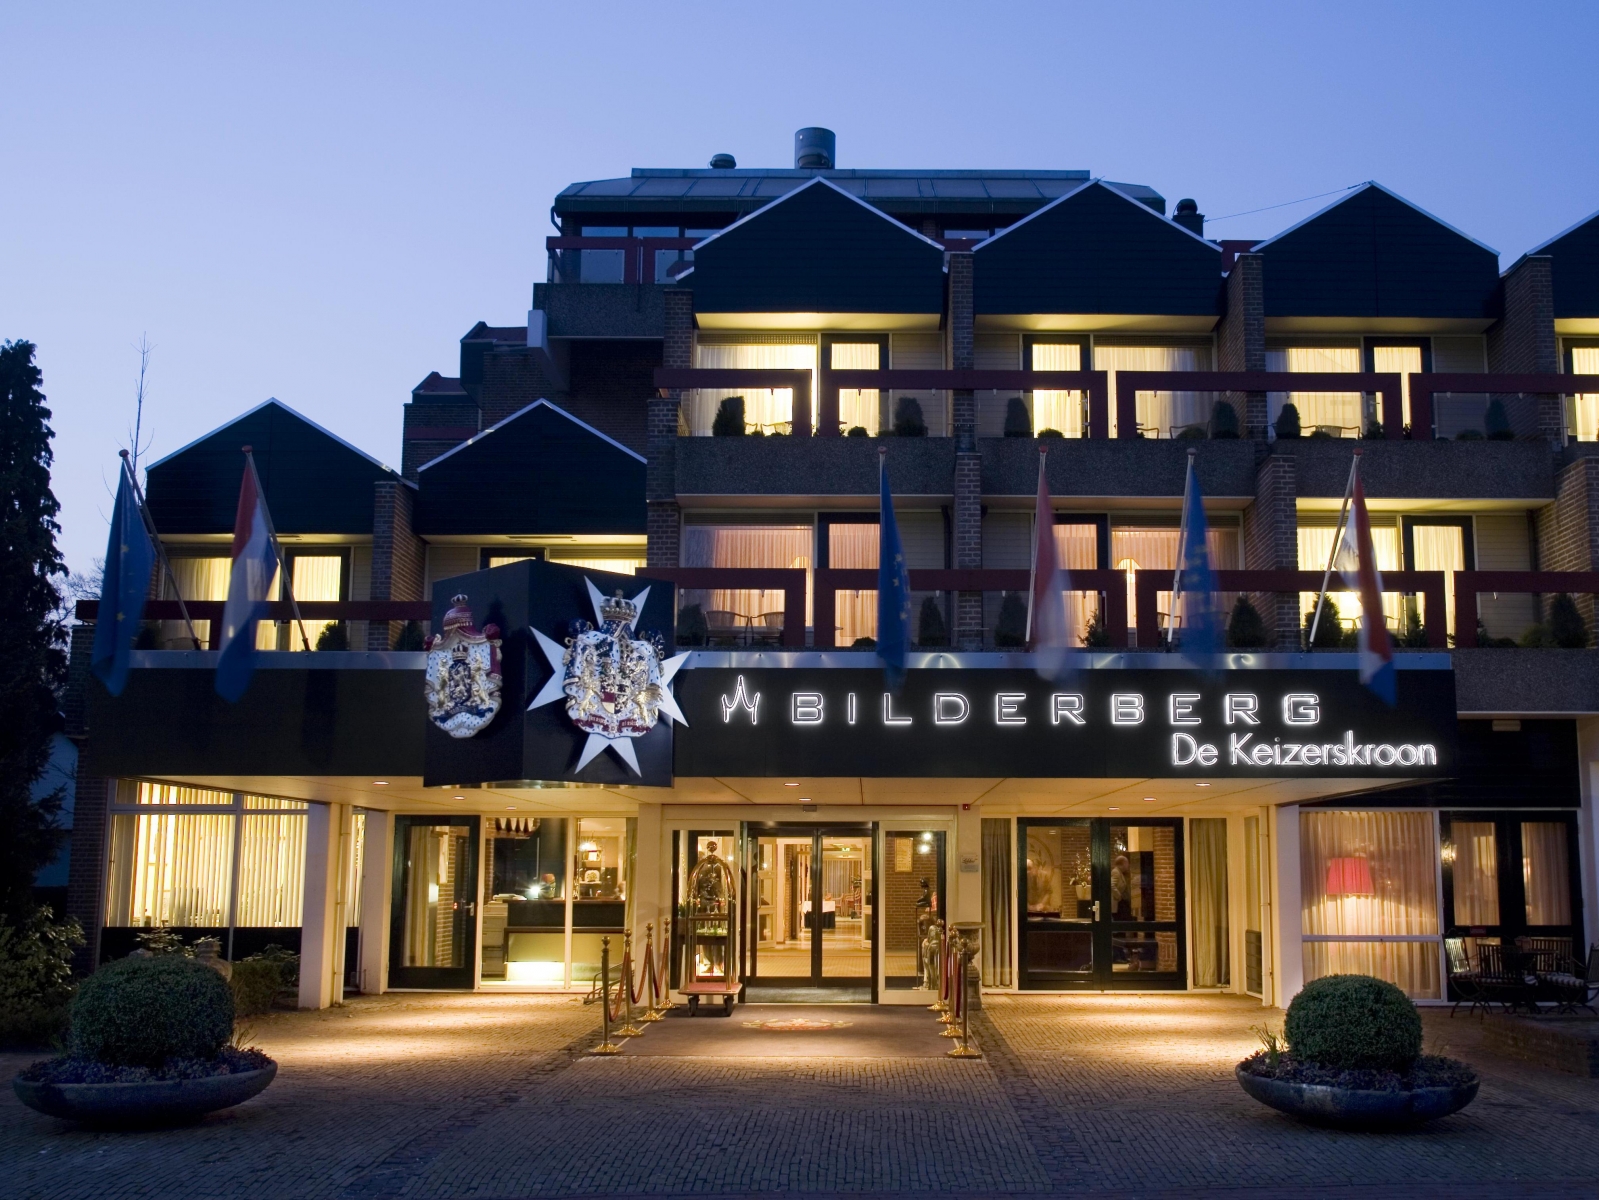 Bilderberg Hotel De Keizerskroon <br/>87.00 ew <br/> <a href='http://vakantieoplossing.nl/outpage/?id=110b052cb44bf9a27f7528a757a7d077' target='_blank'>View Details</a>